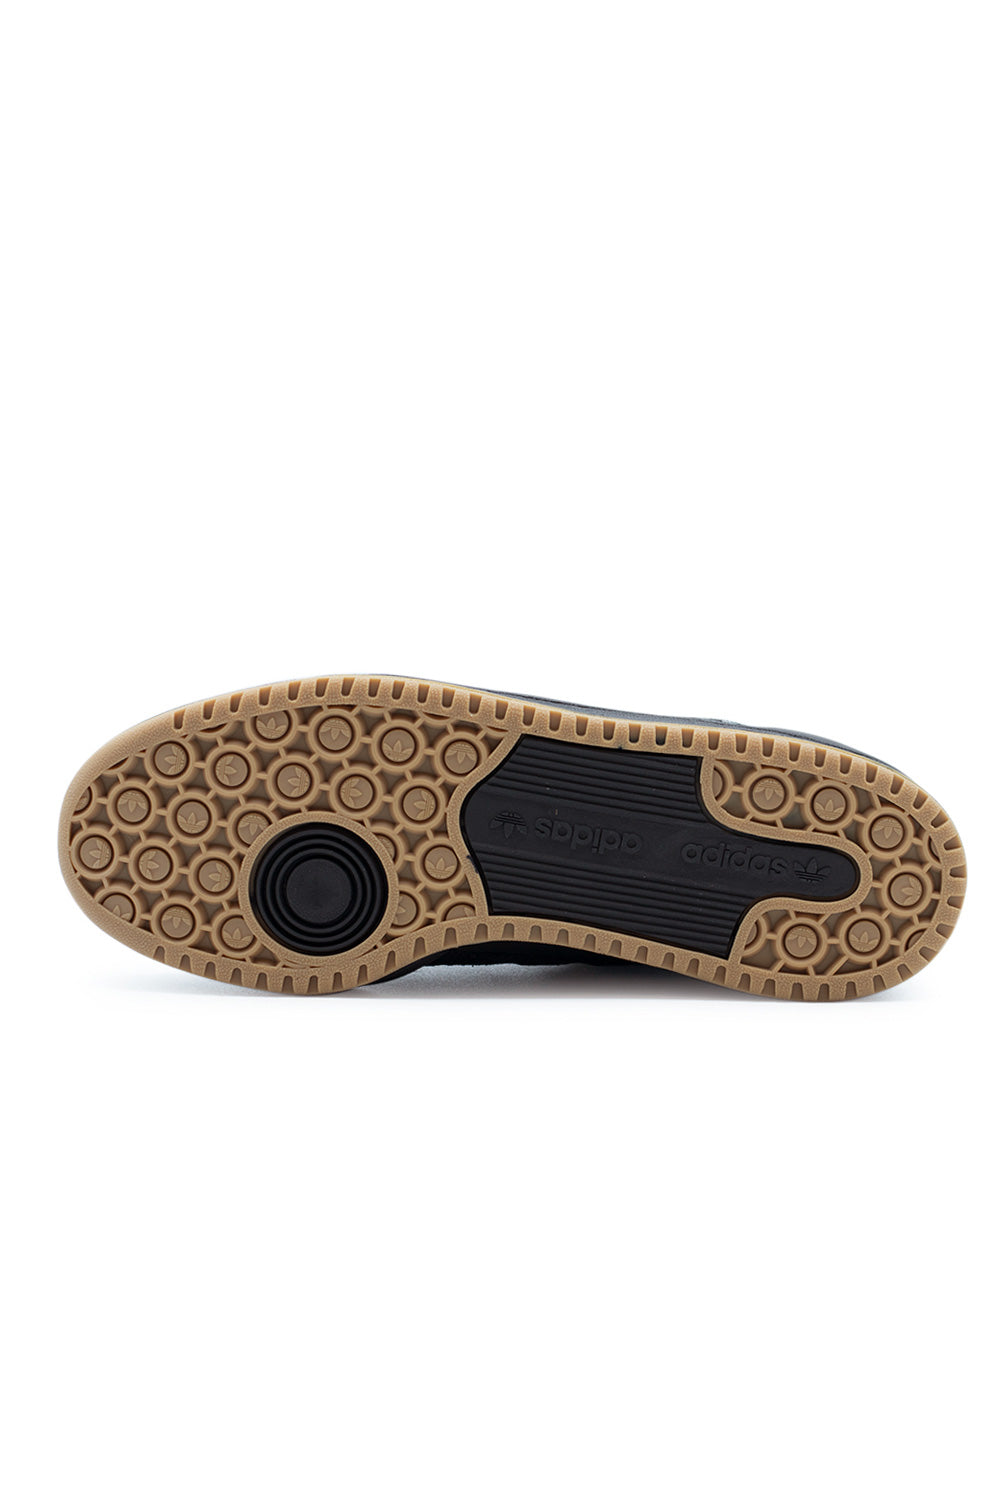 Adidas Forum 84 Low ADV Shoe Core Black / Carbon / Grey Three - BONKERS